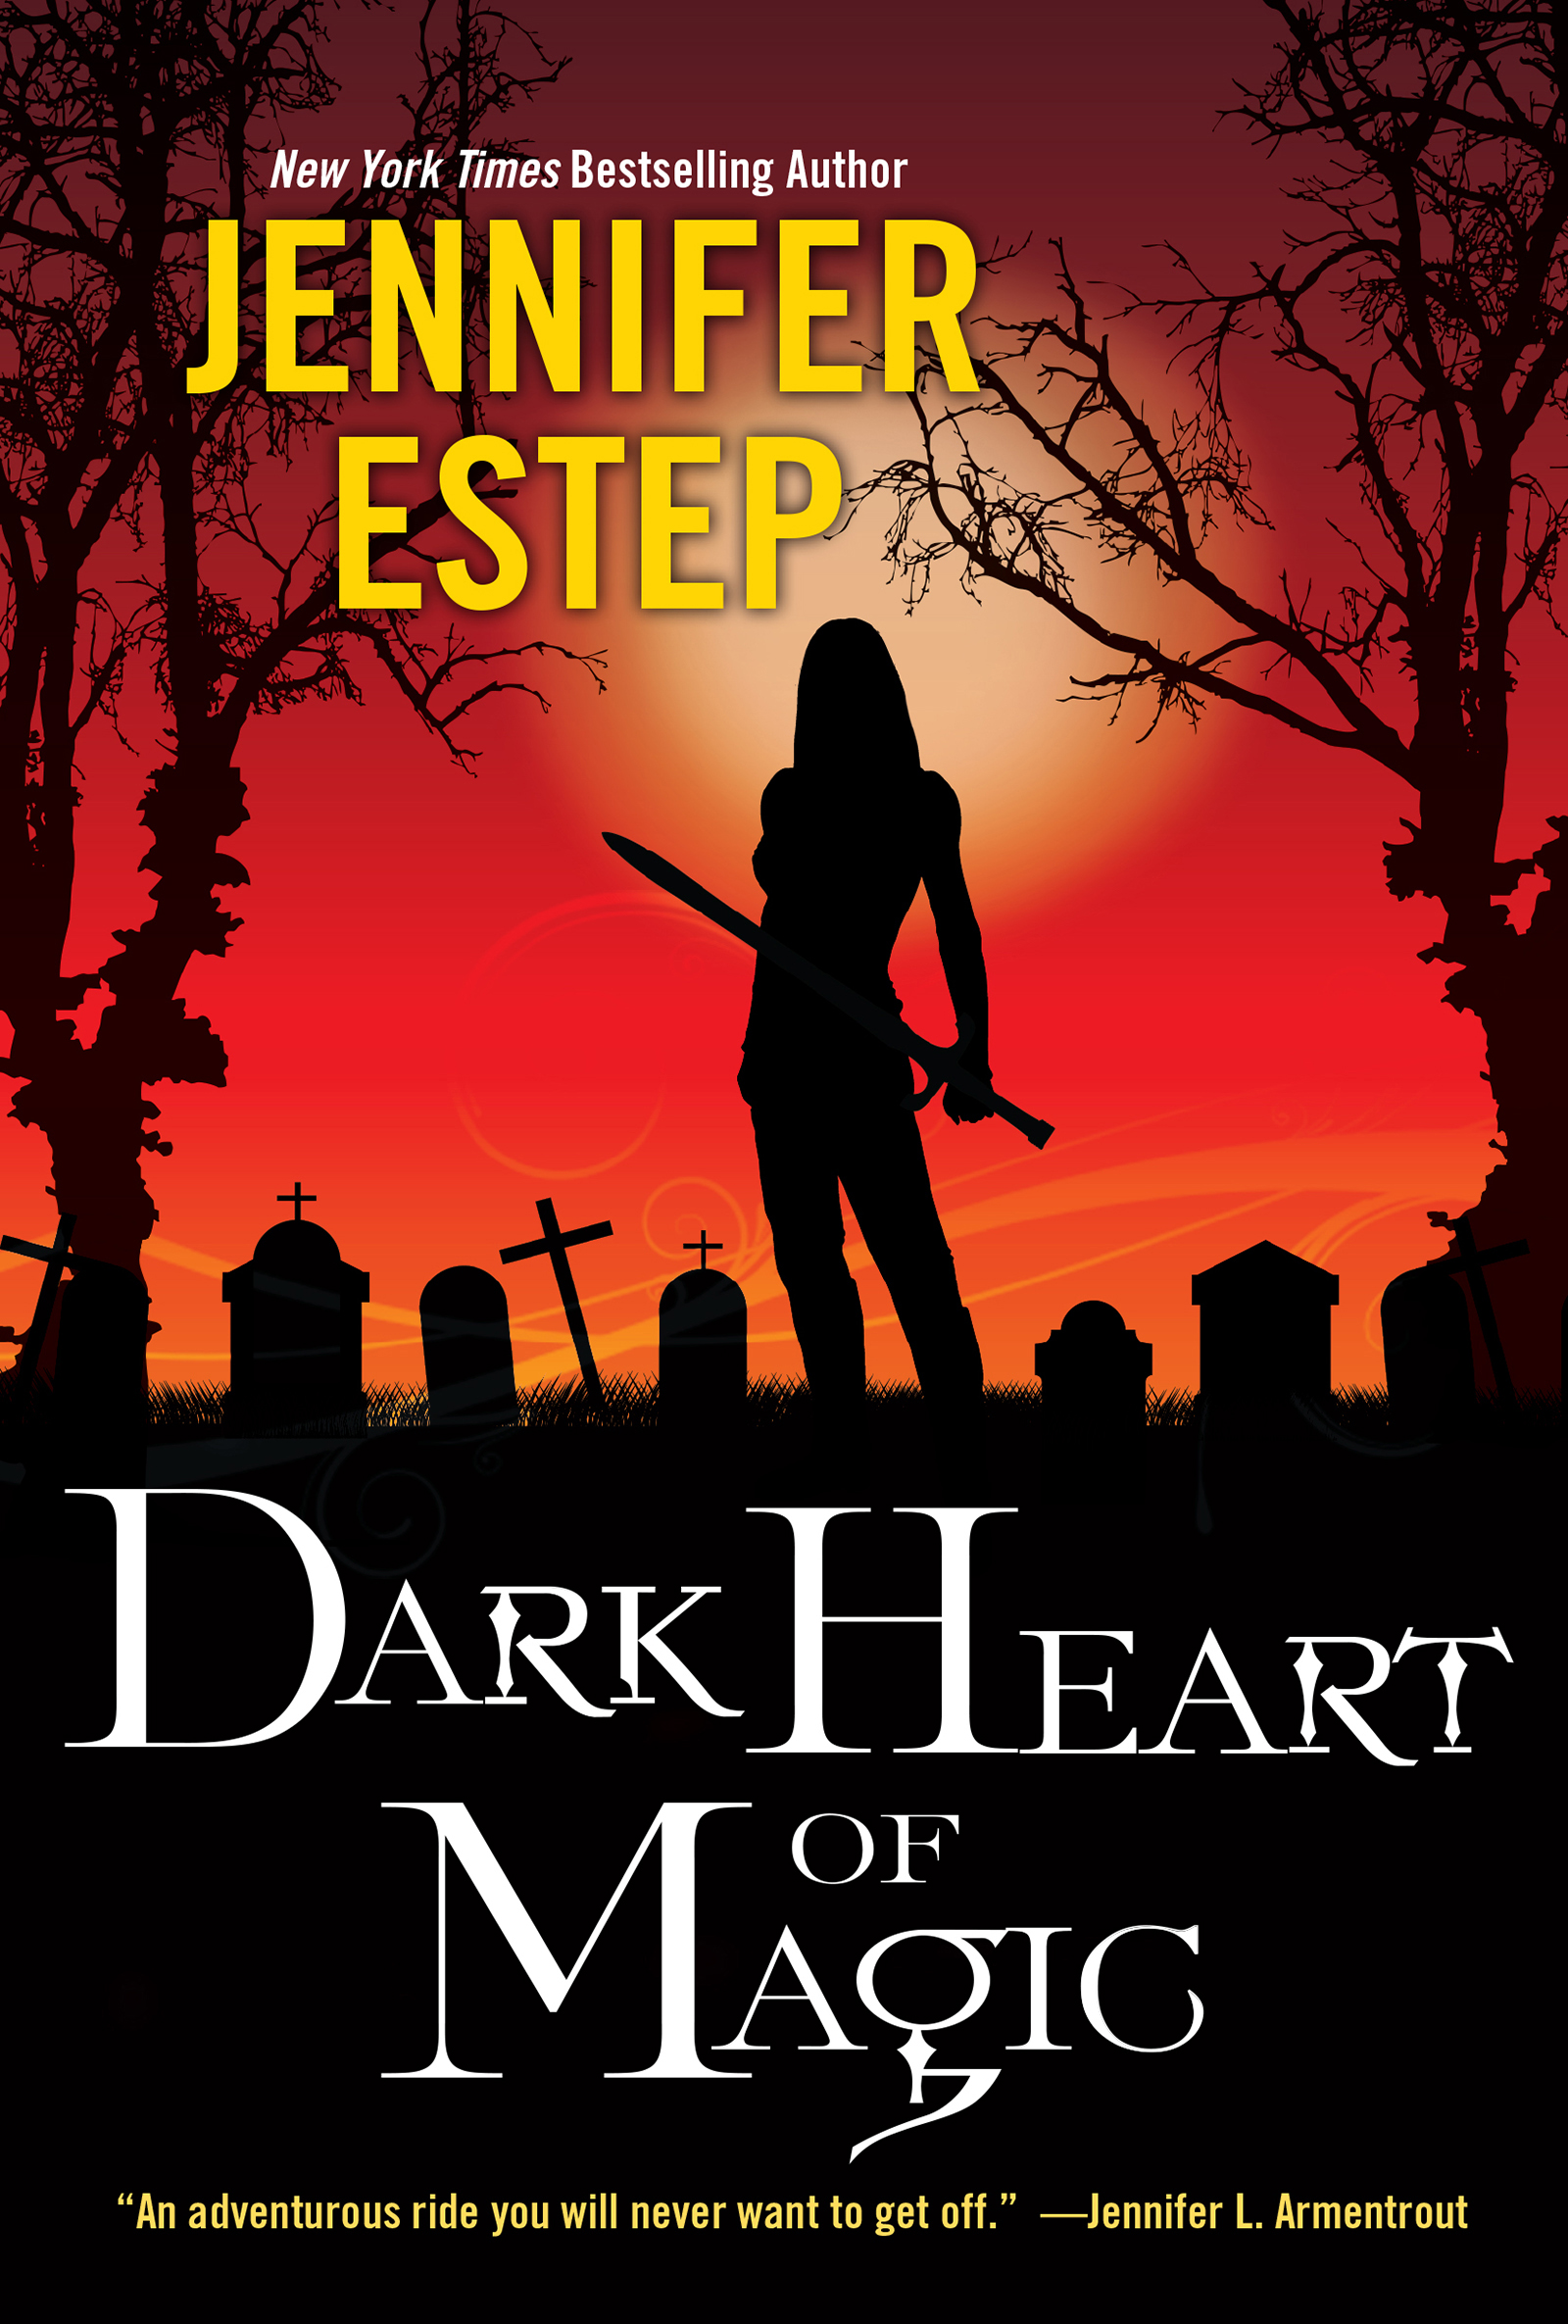 Dark heart of magic cover image